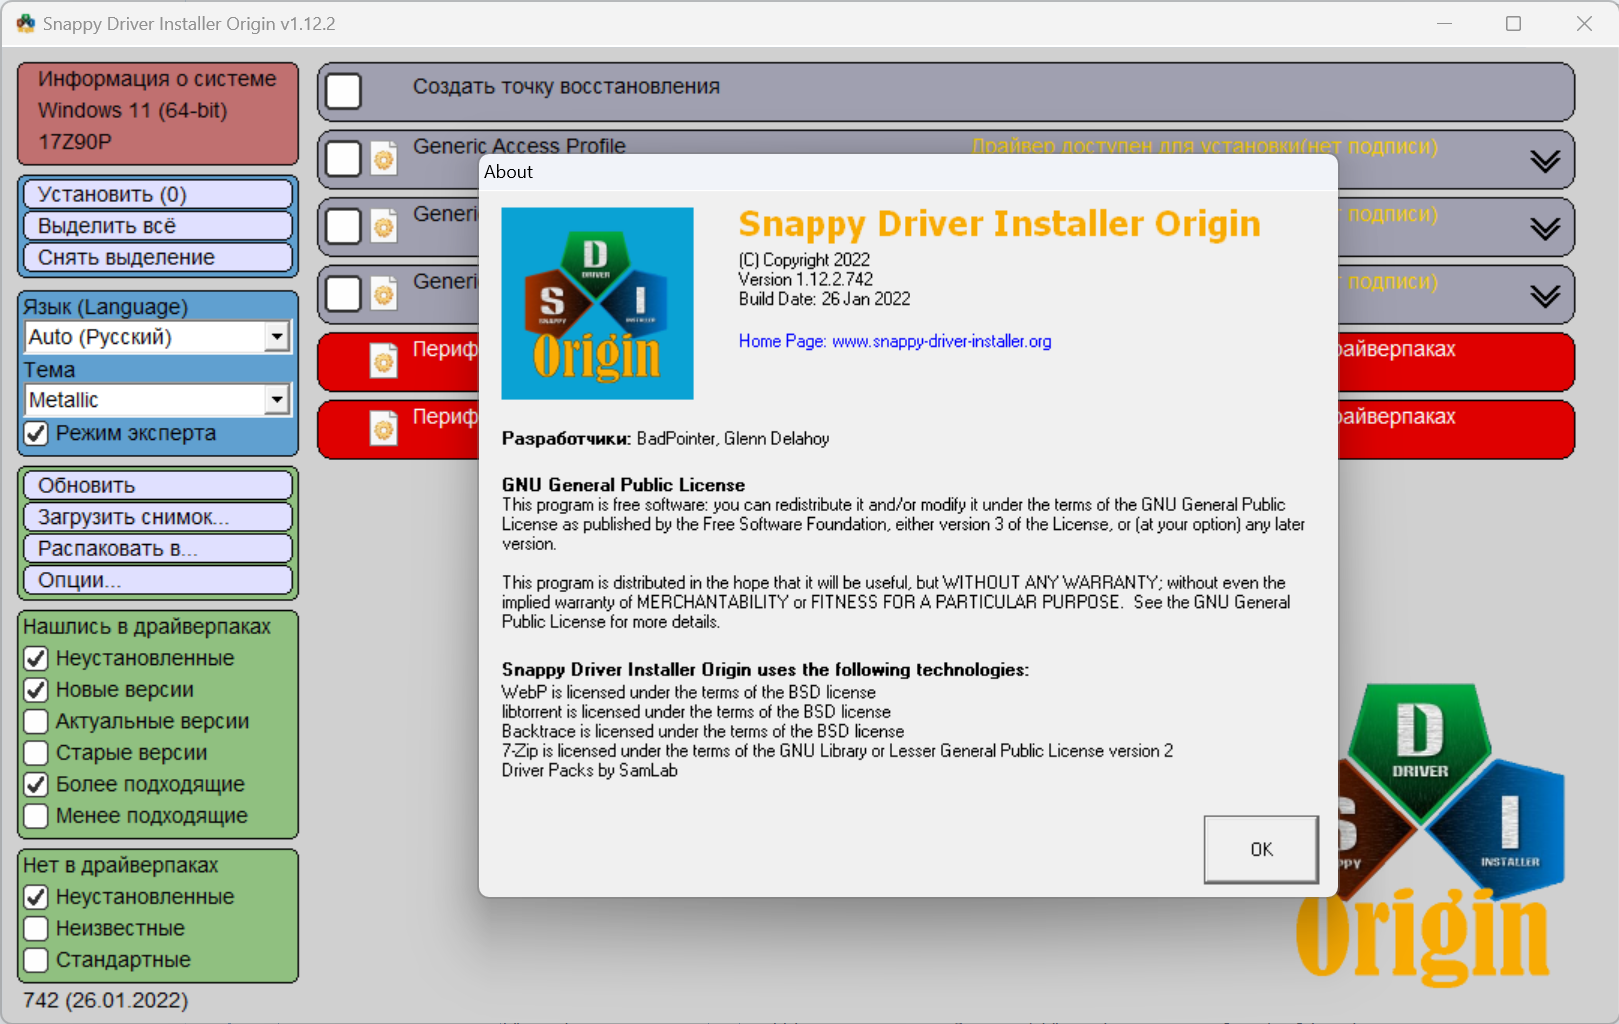 Snappy Driver Installer Origin R742 / Драйверпаки 22.04.2 [Multi/Ru]